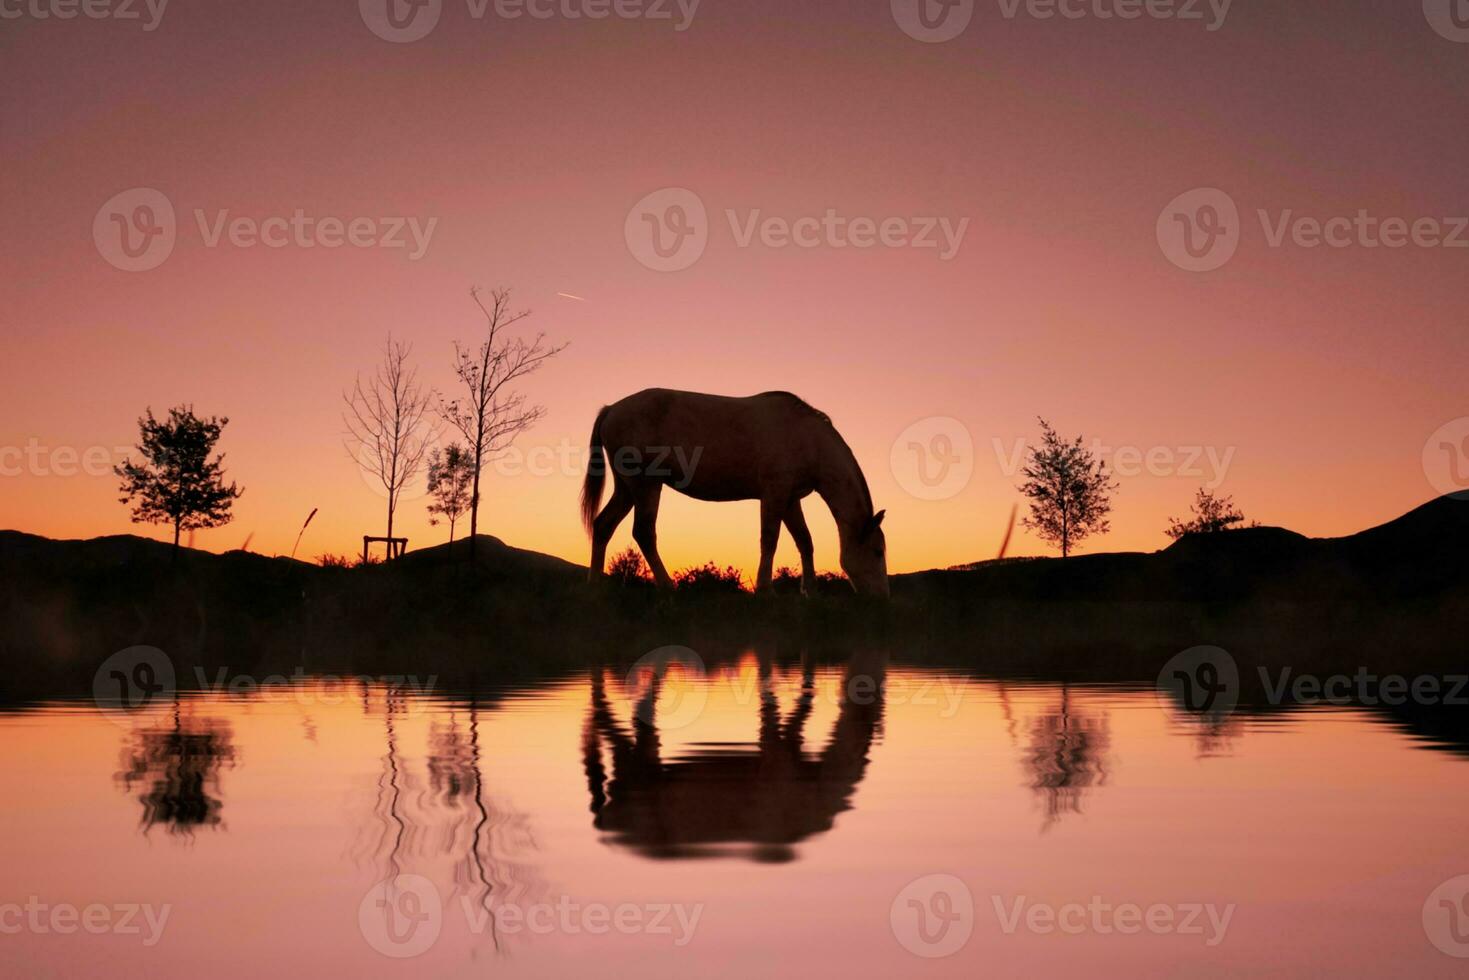 paard silhouet in de platteland en mooi zonsondergang achtergrond foto